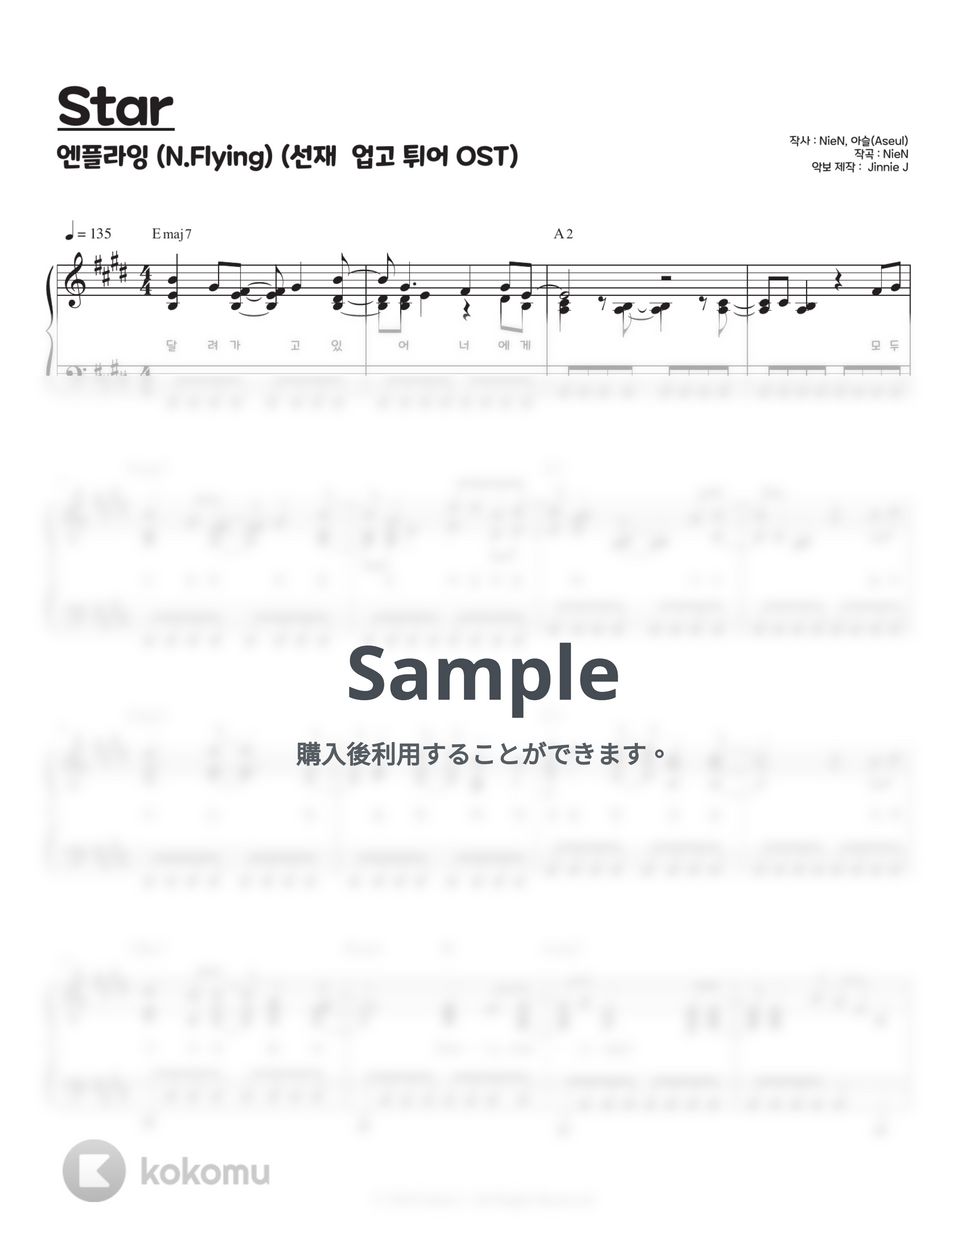 N. Flying (엔플라잉) - Star (Lovely Runner OST) (E key / F key) by Jinnie J